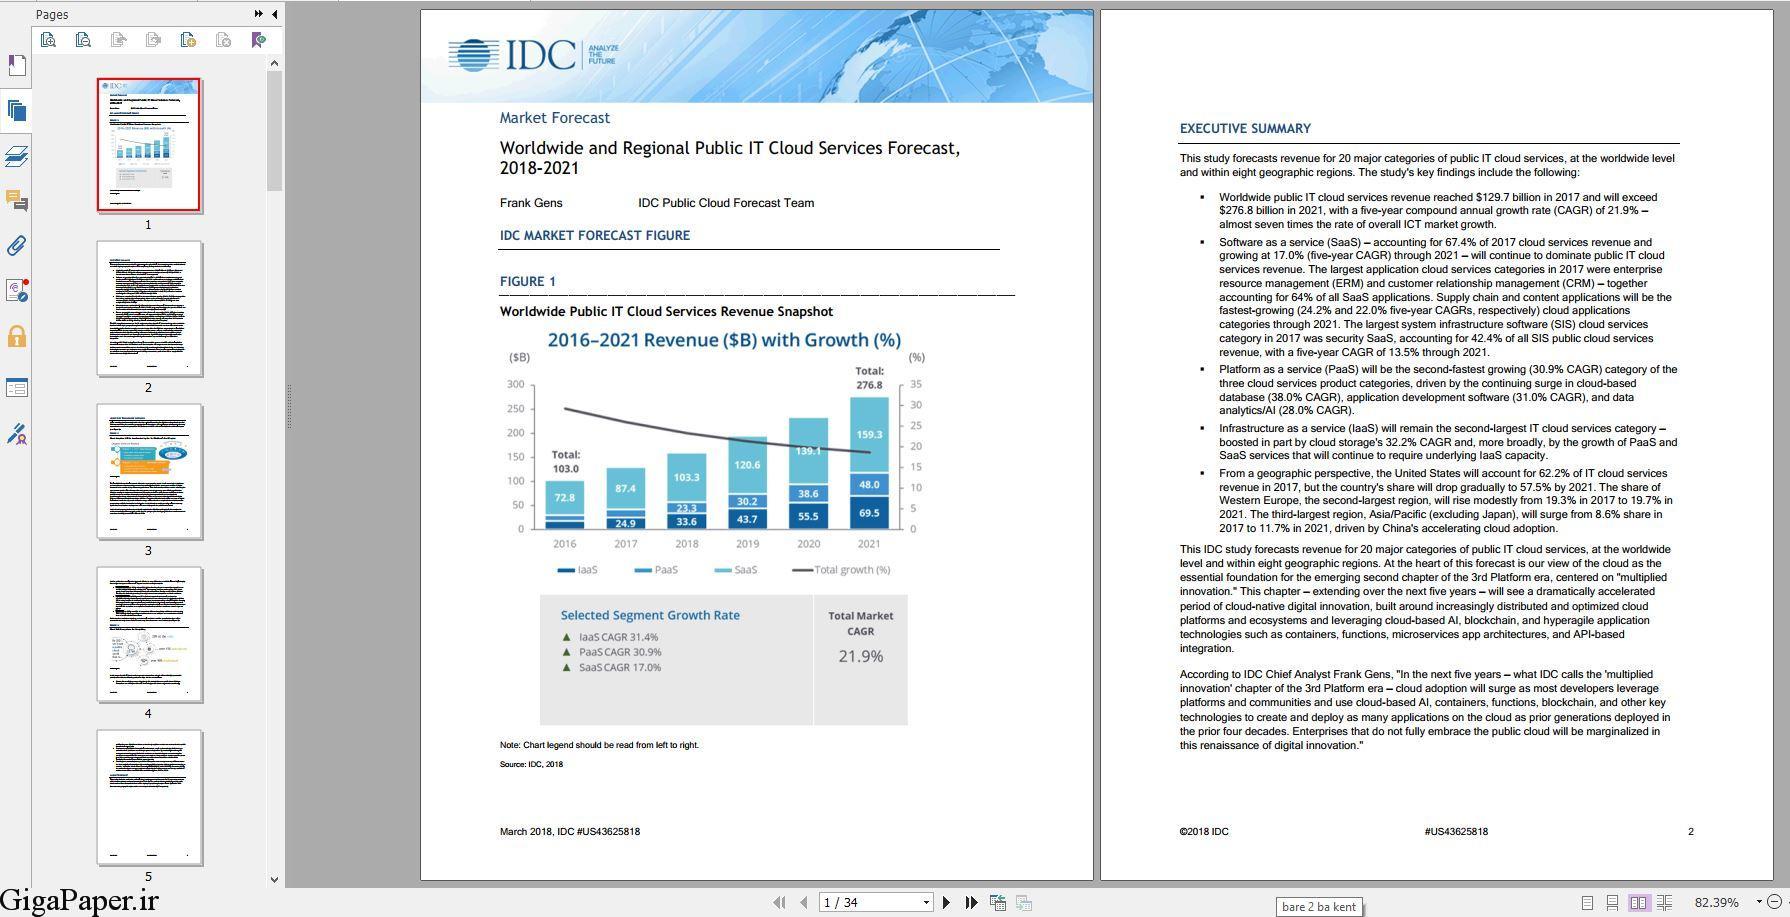  دانلود گزارش Worldwide and Regional Public IT Cloud Services Forecast, 2018–2021 خرید گزارش IDC دانلود گزارش IDC.com تهیه جديدترين گزارشهای IDC